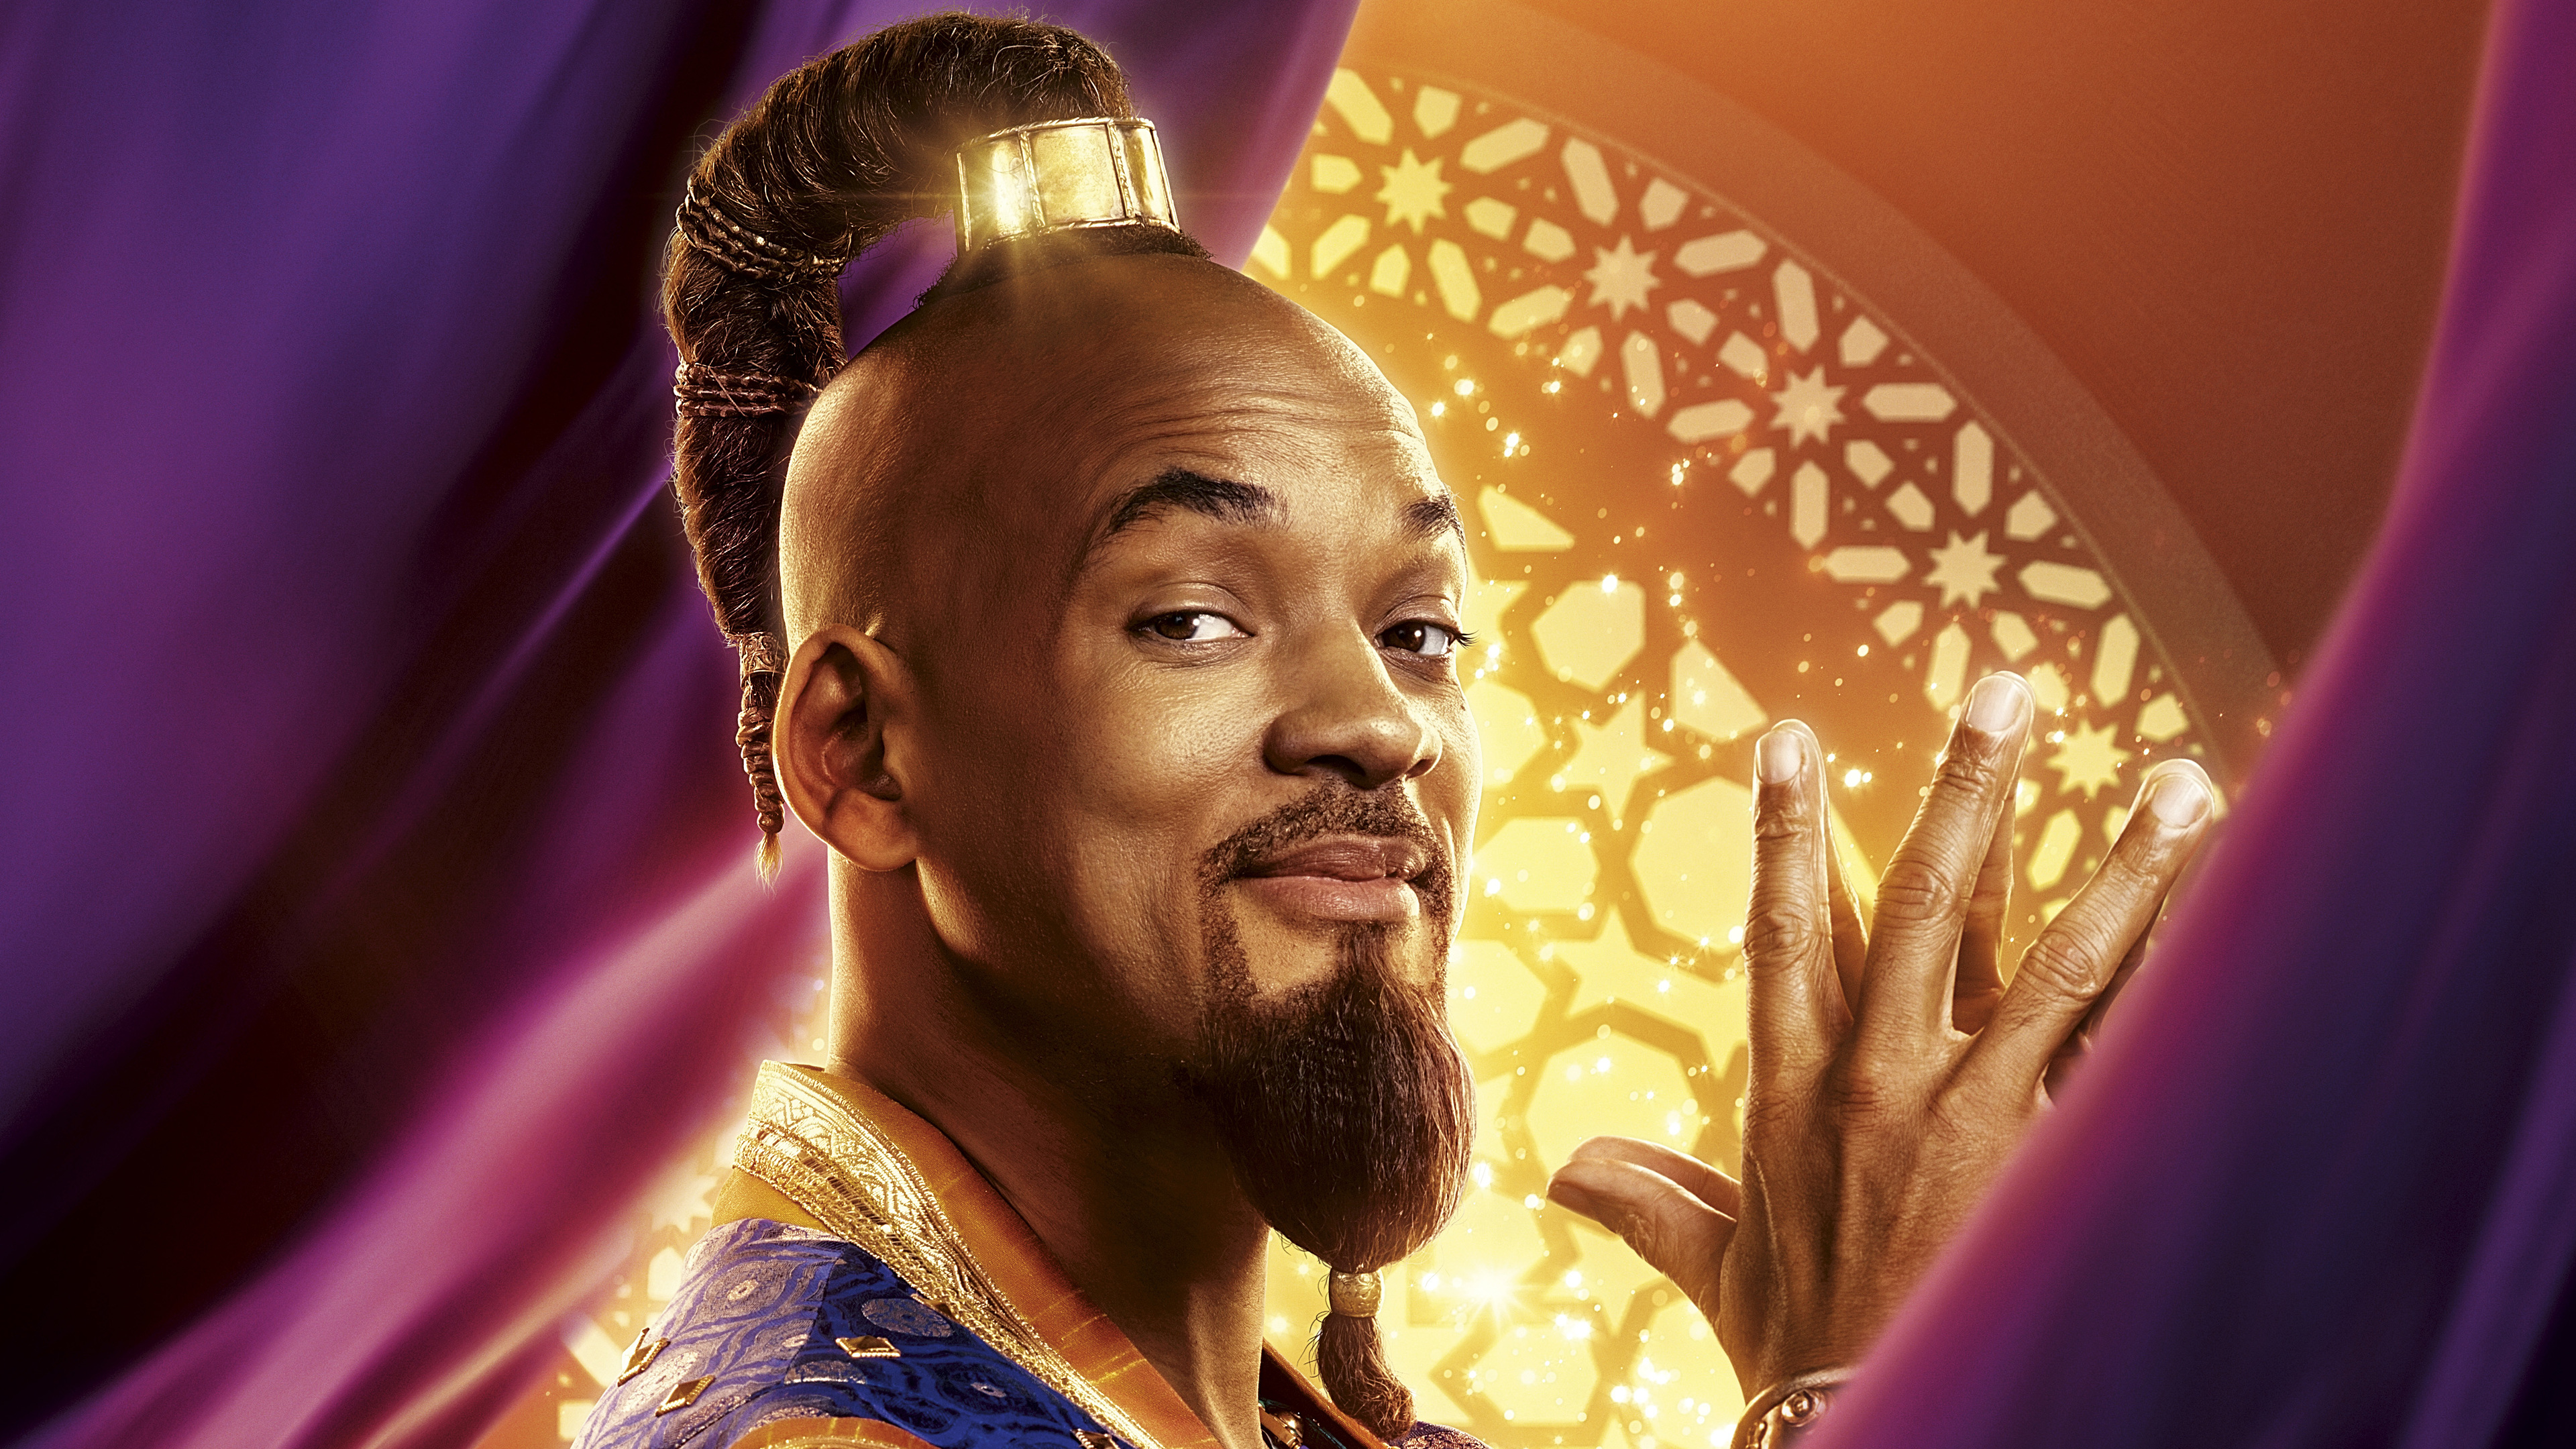 Aladdin 2019 Movie Wallpapers